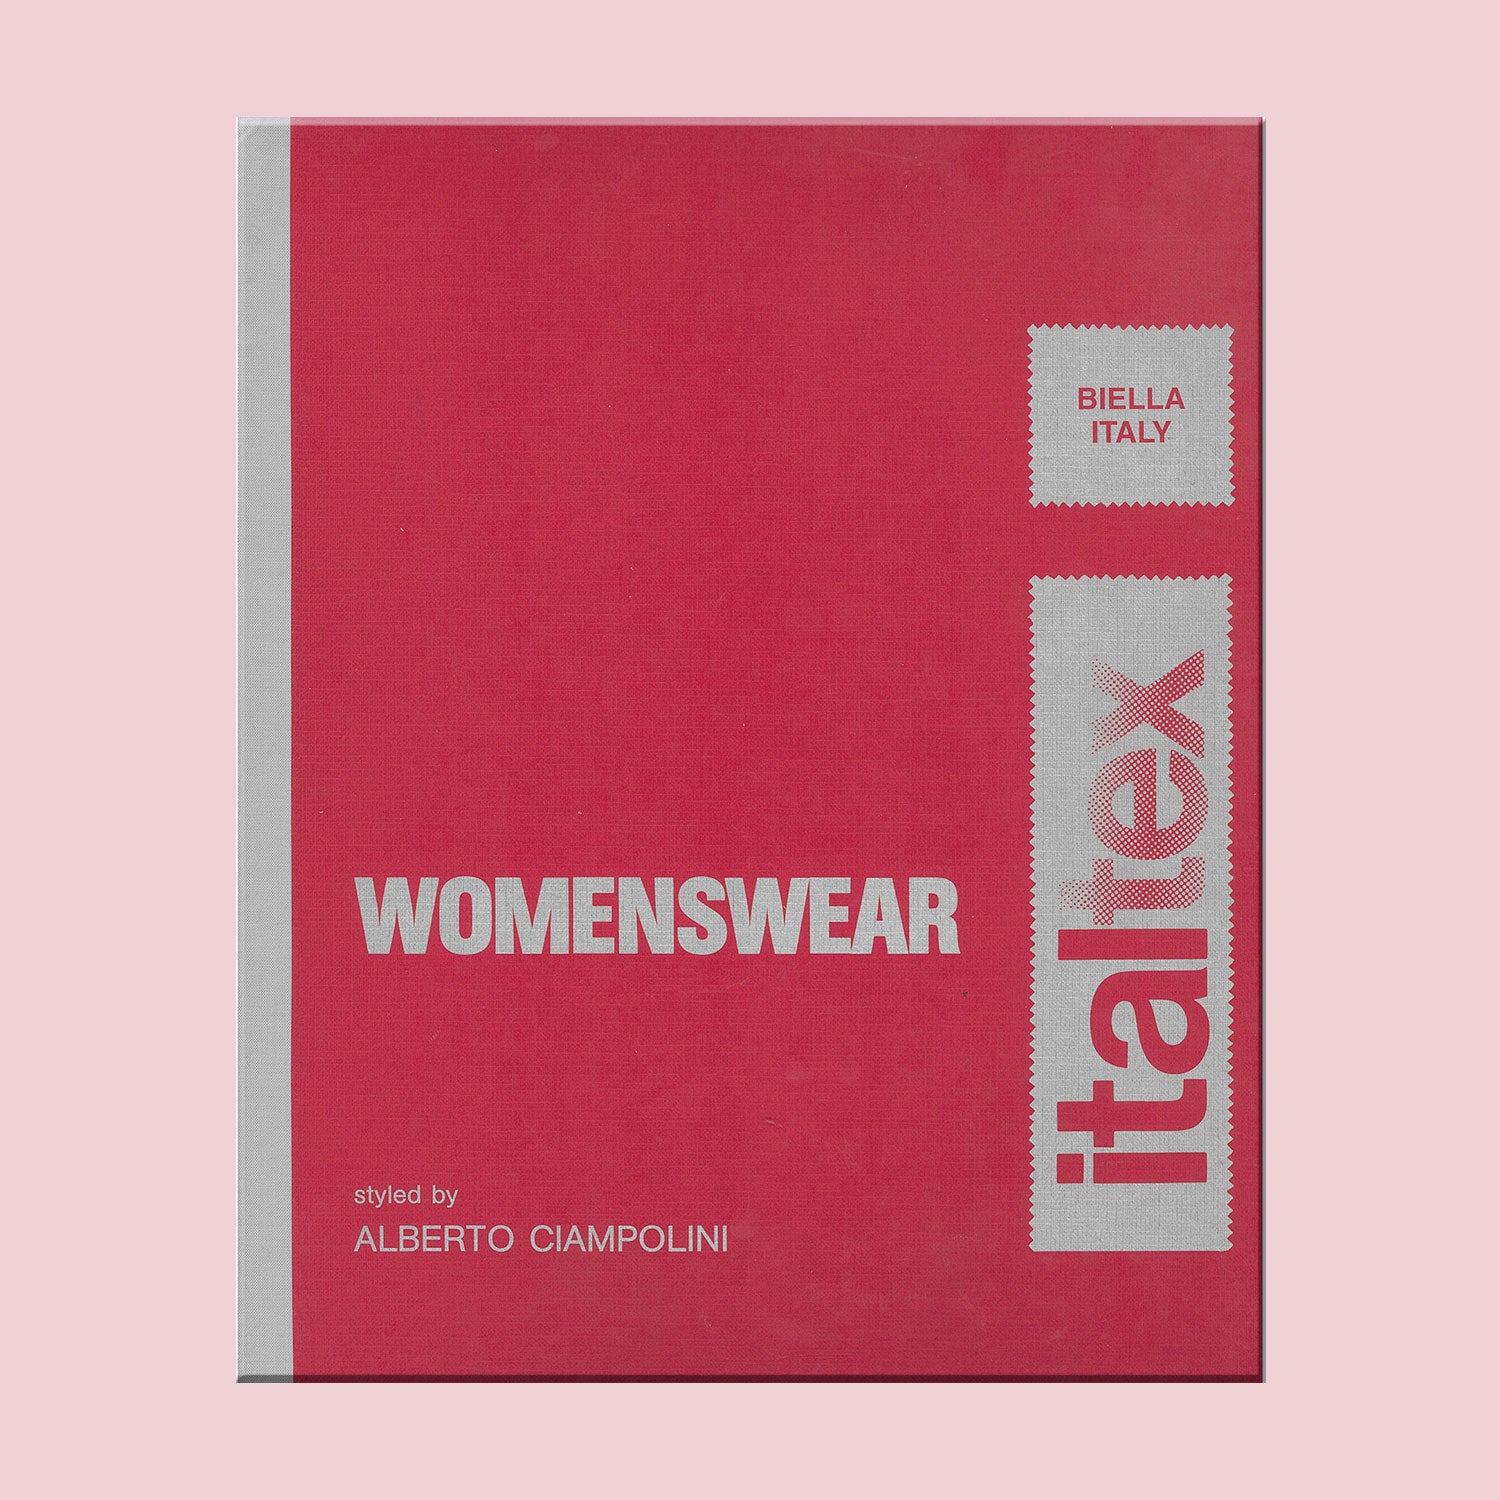 Thick red canvas big filer printed in silver for the Italtex Womenswear trend book by Alberto Ciampolini 